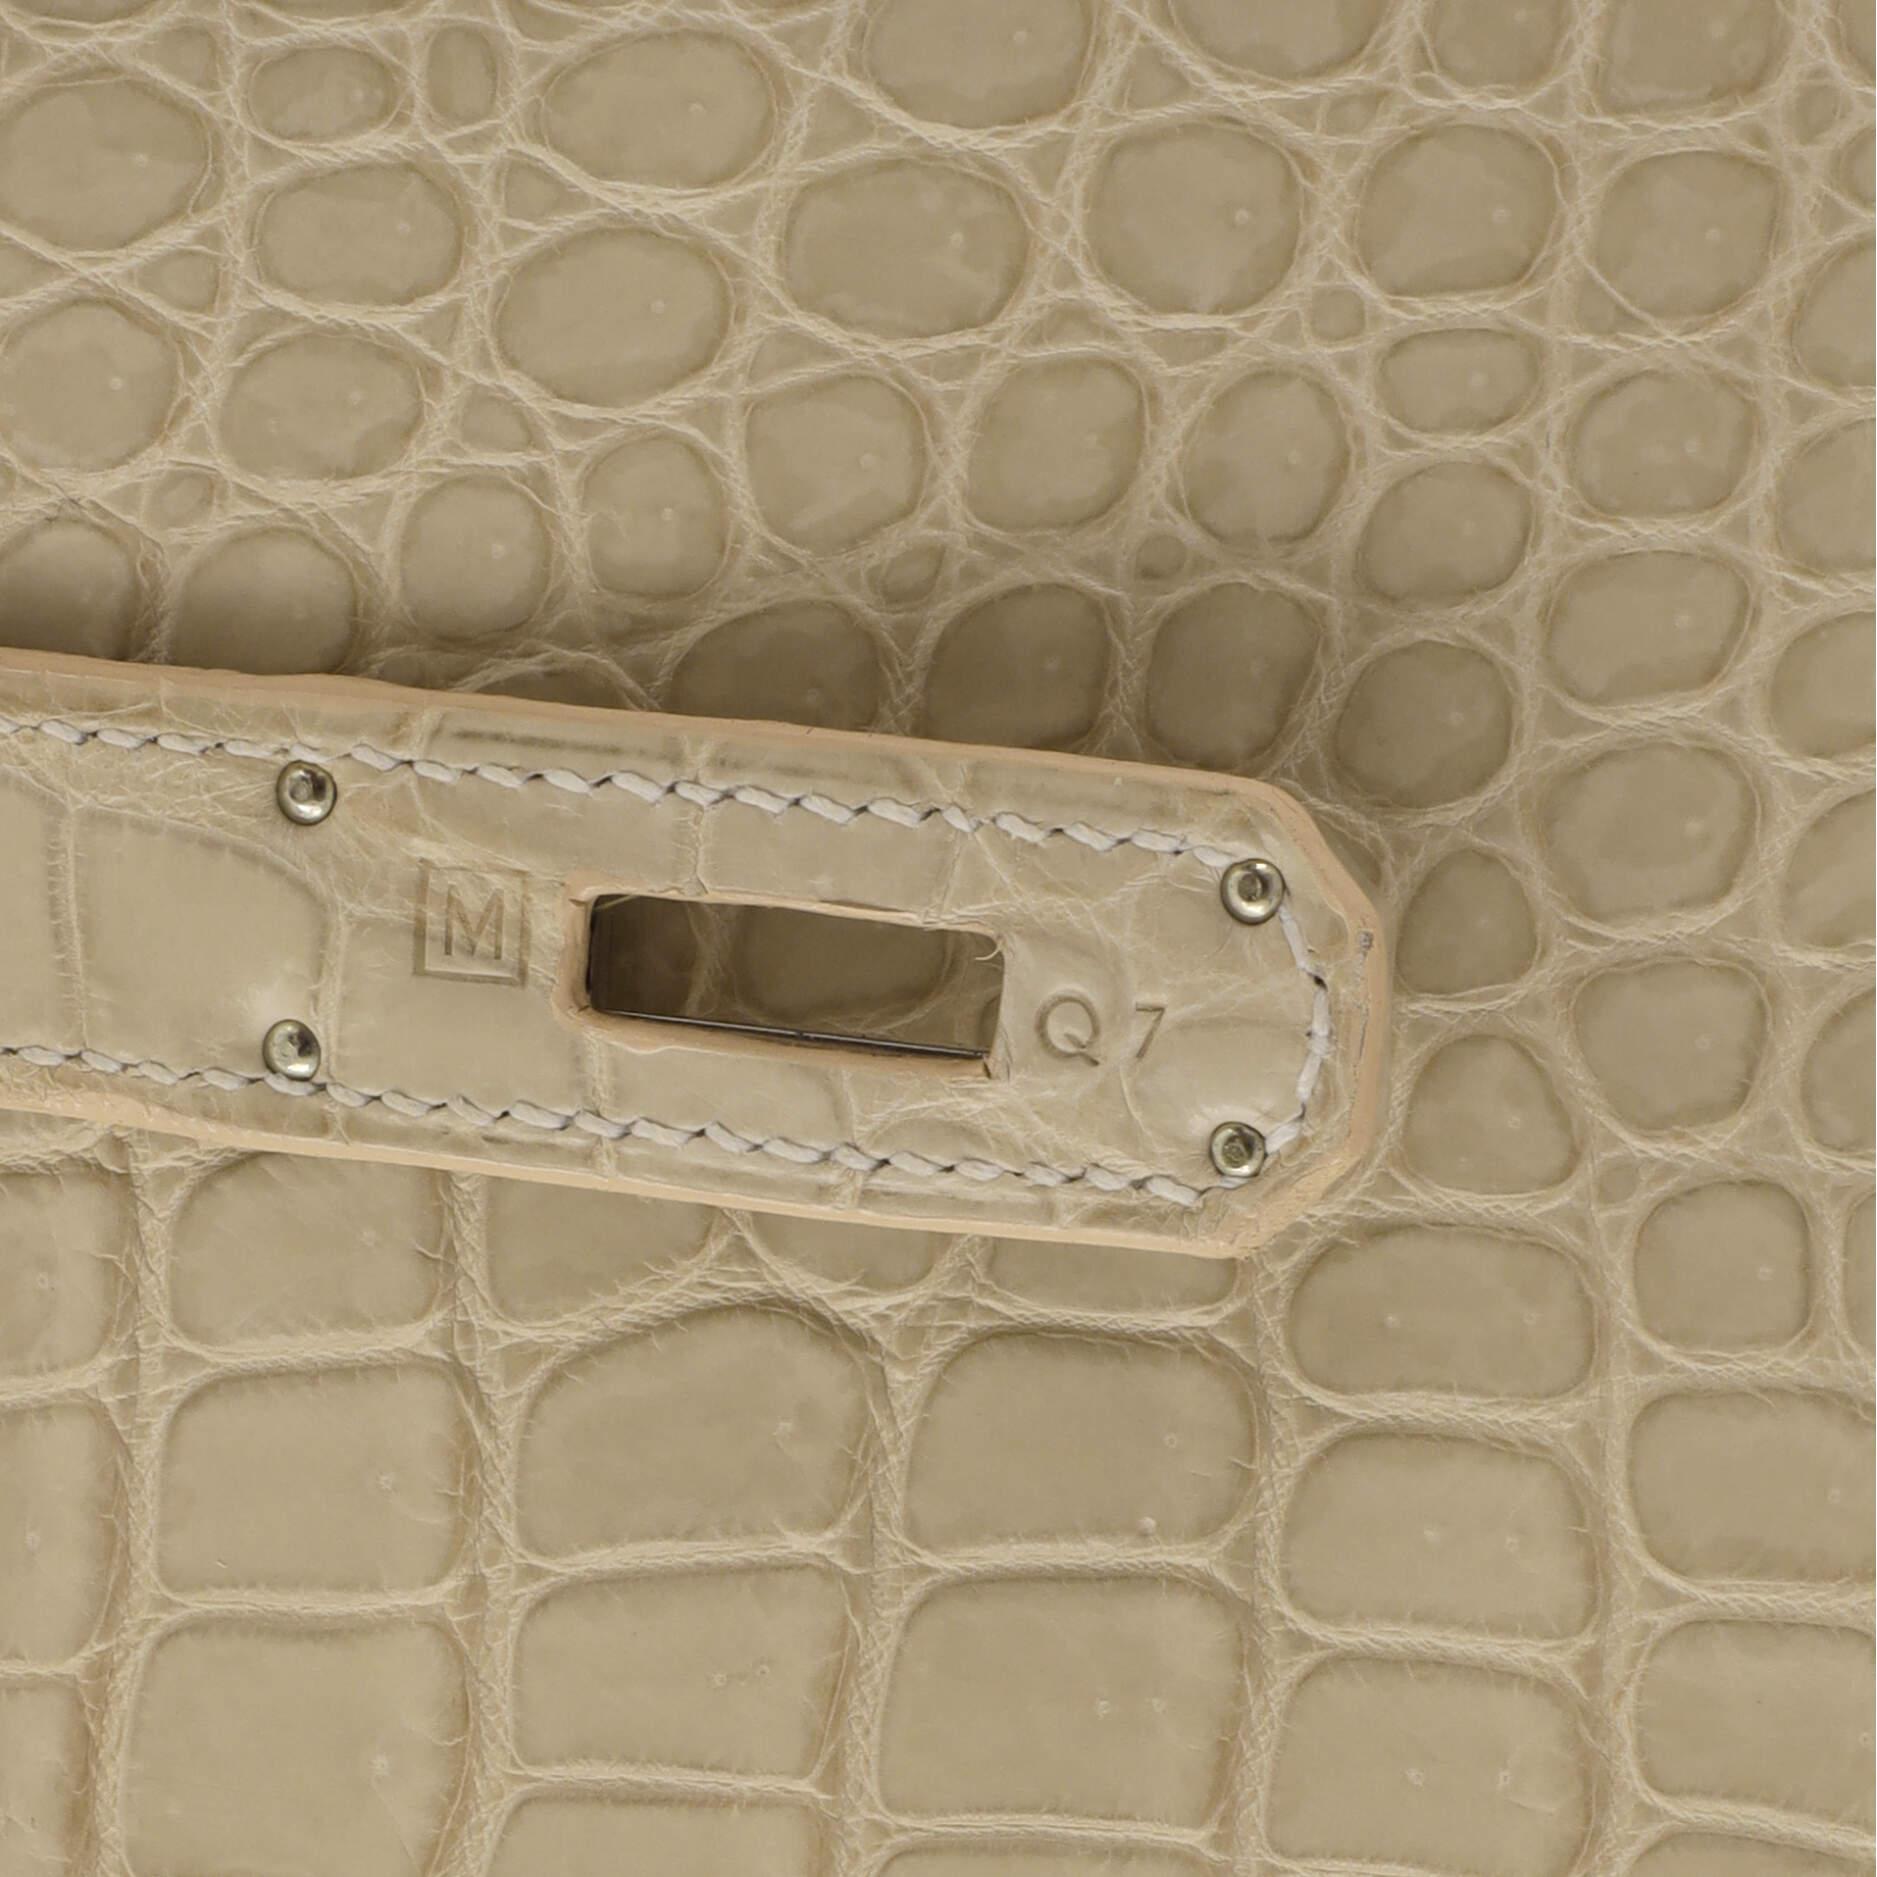 Hermes Birkin Handbag Light Matte Porosus Crocodile With Palladium Hardware 35 7